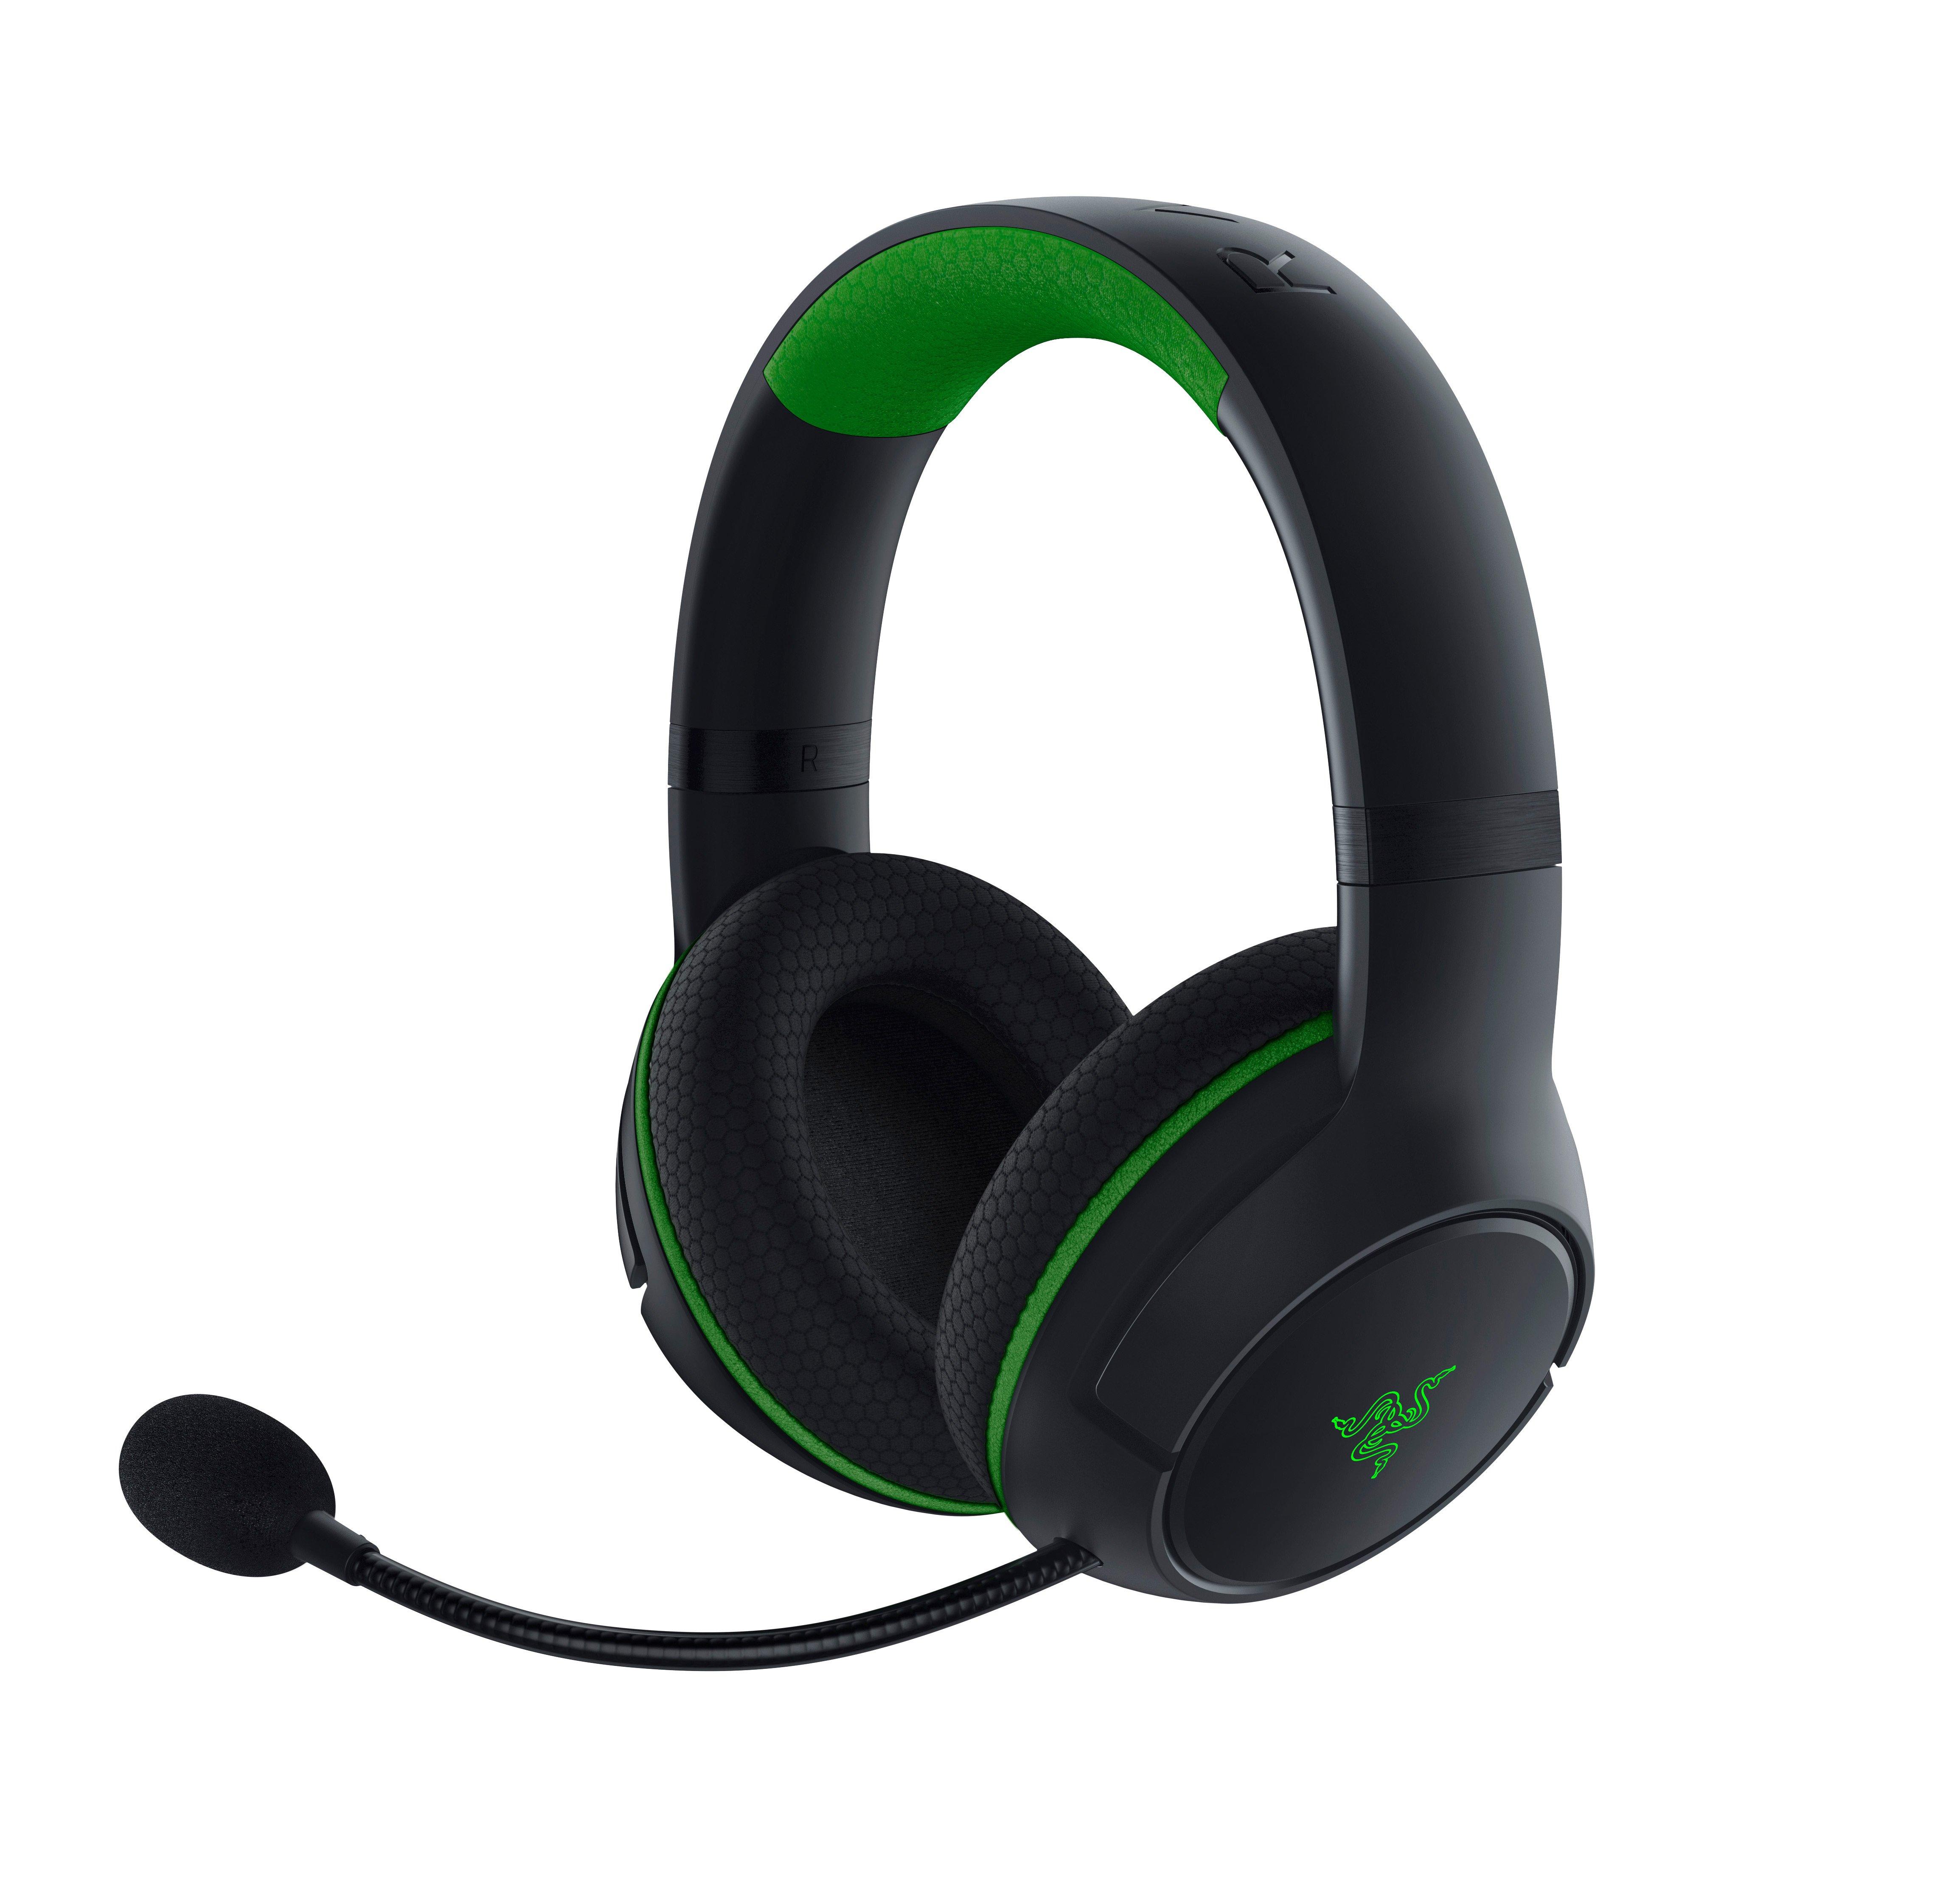 Buy the Best Gaming Headset or Headphones, Razer Online Store